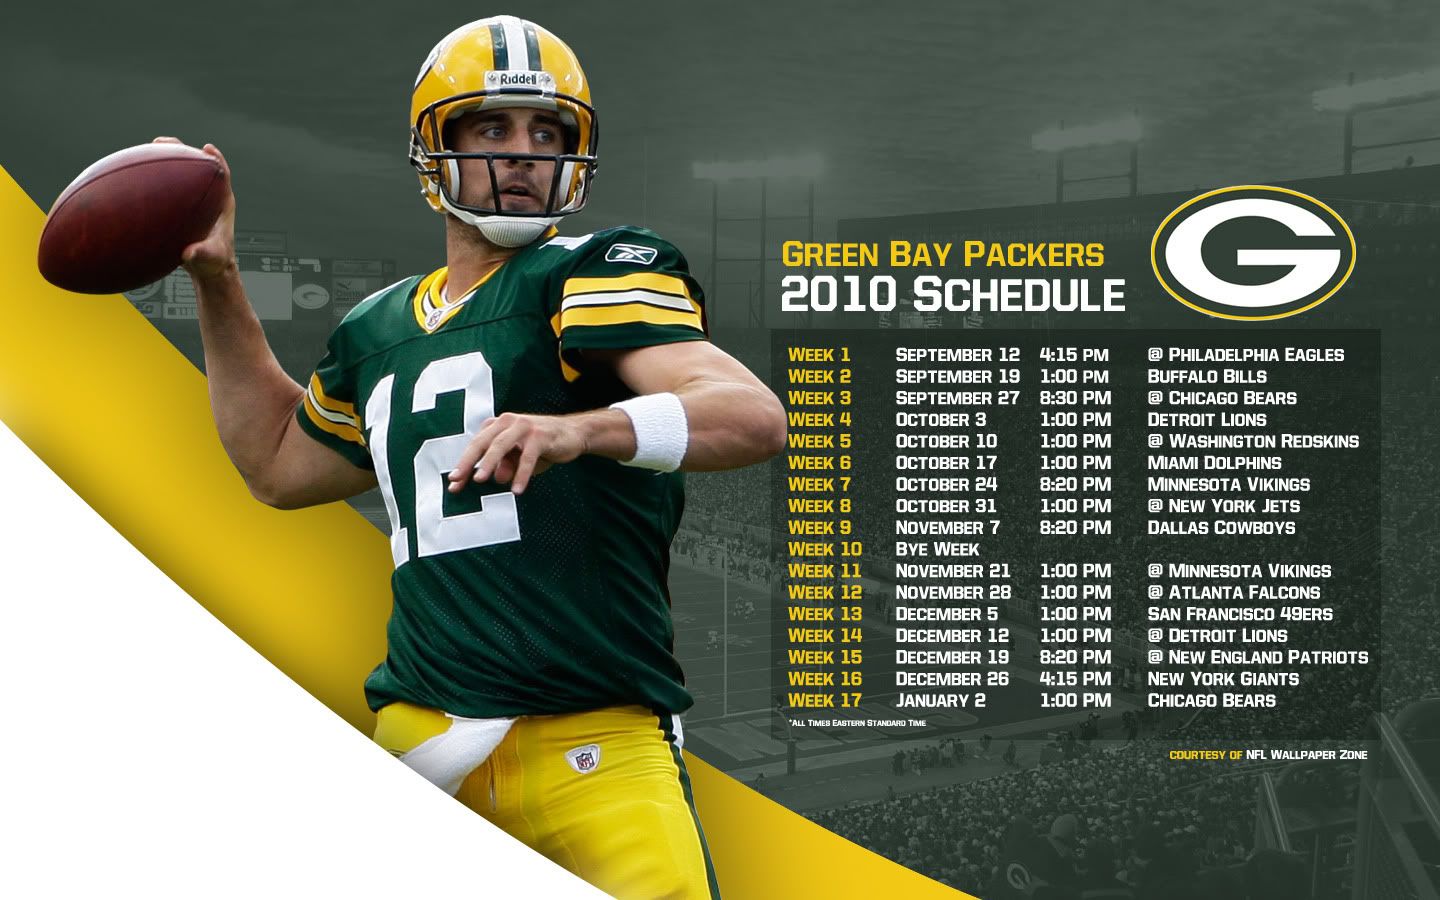 Packers2010ScheduleWallpaper.jpg 2010 Green Bay Packers Schedule Wallpaper 